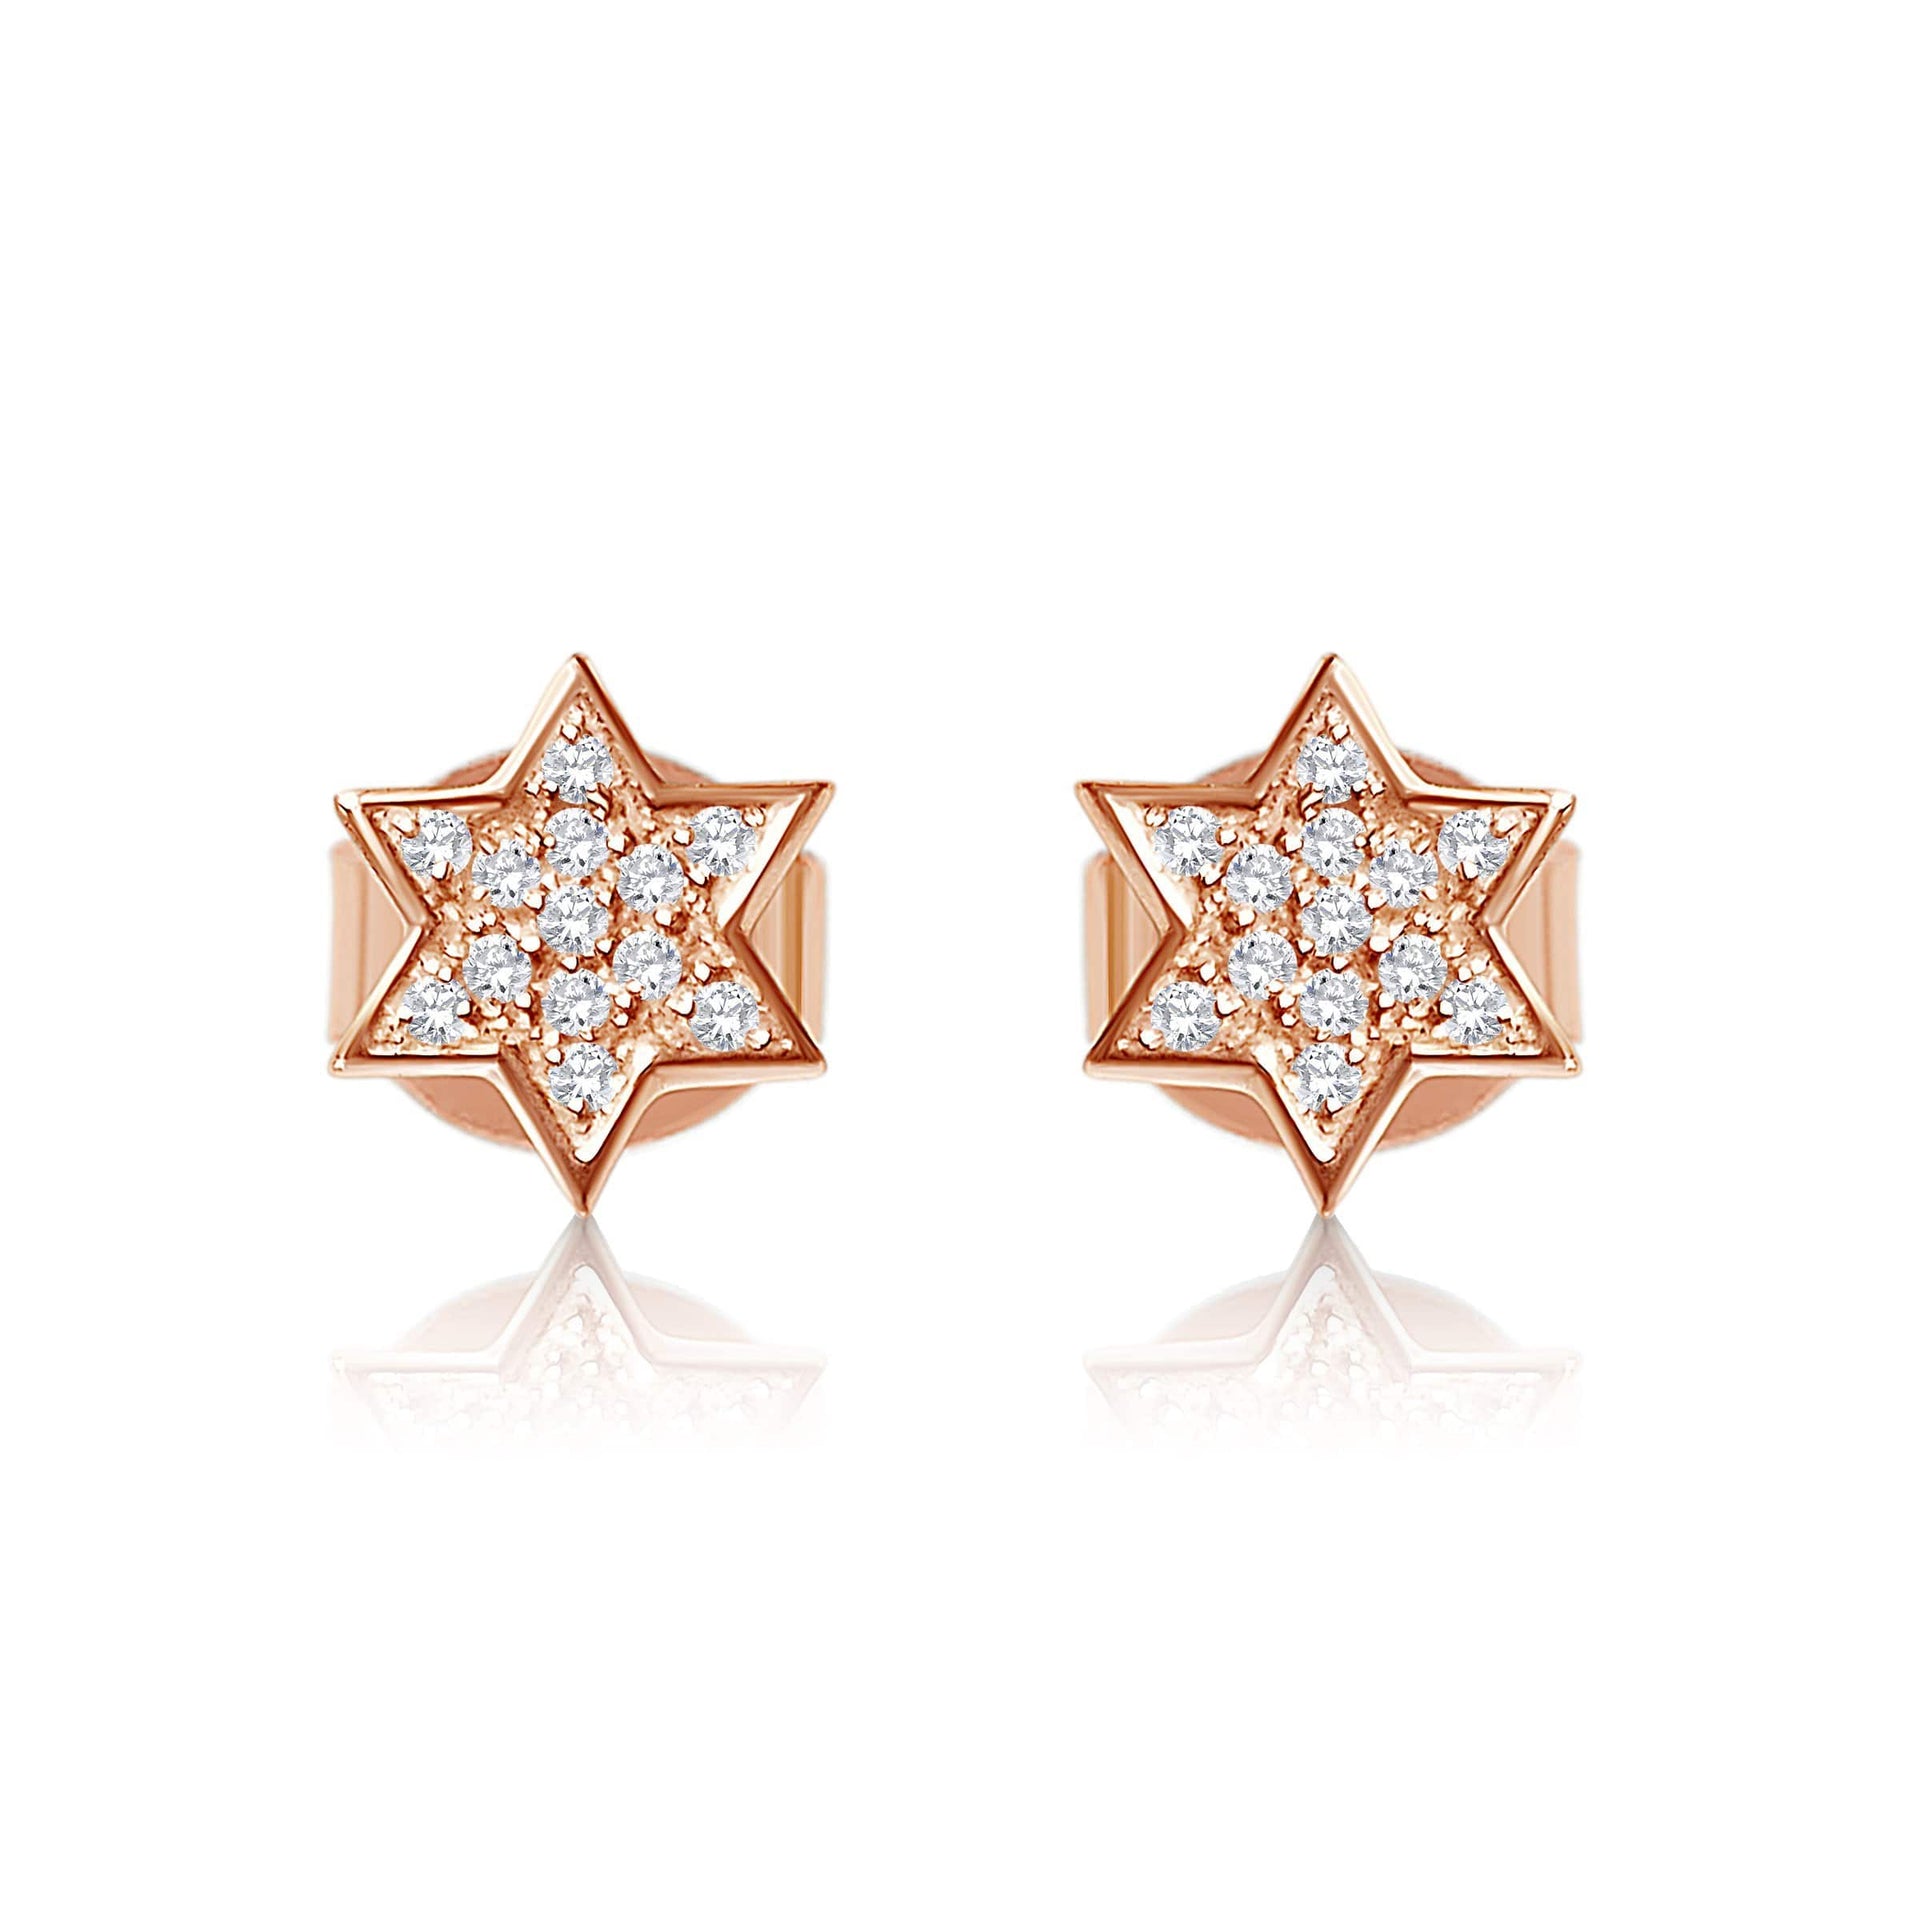 Alef Bet Earrings Rose Gold Diamond Star of David Earrings - 14k Gold, White Gold or Rose Gold